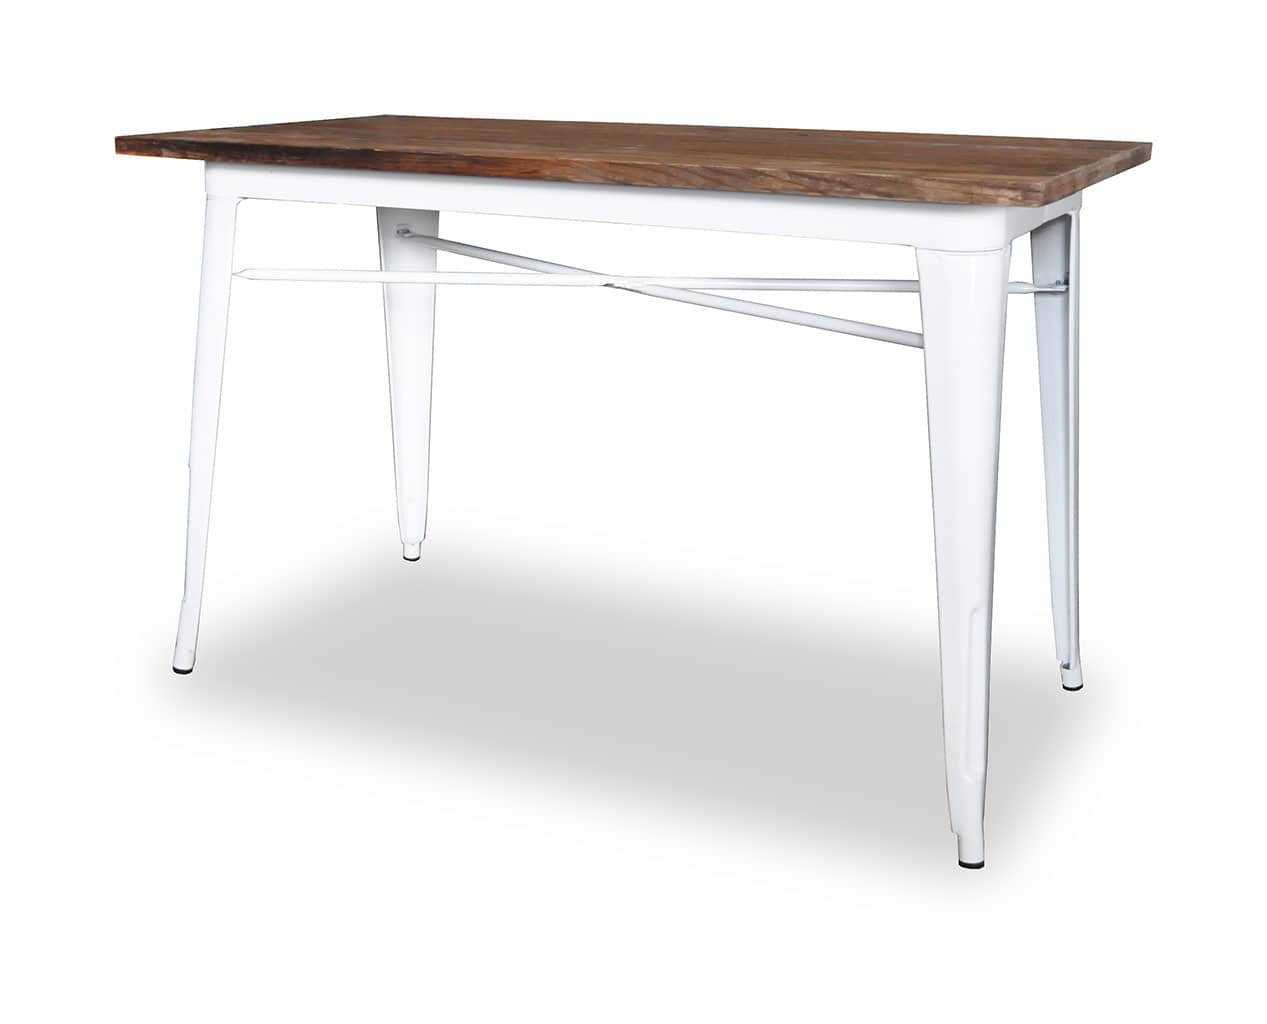 Replica Tolix Wooden Top Table, 120 x 60 x 75cm high, White Legs.